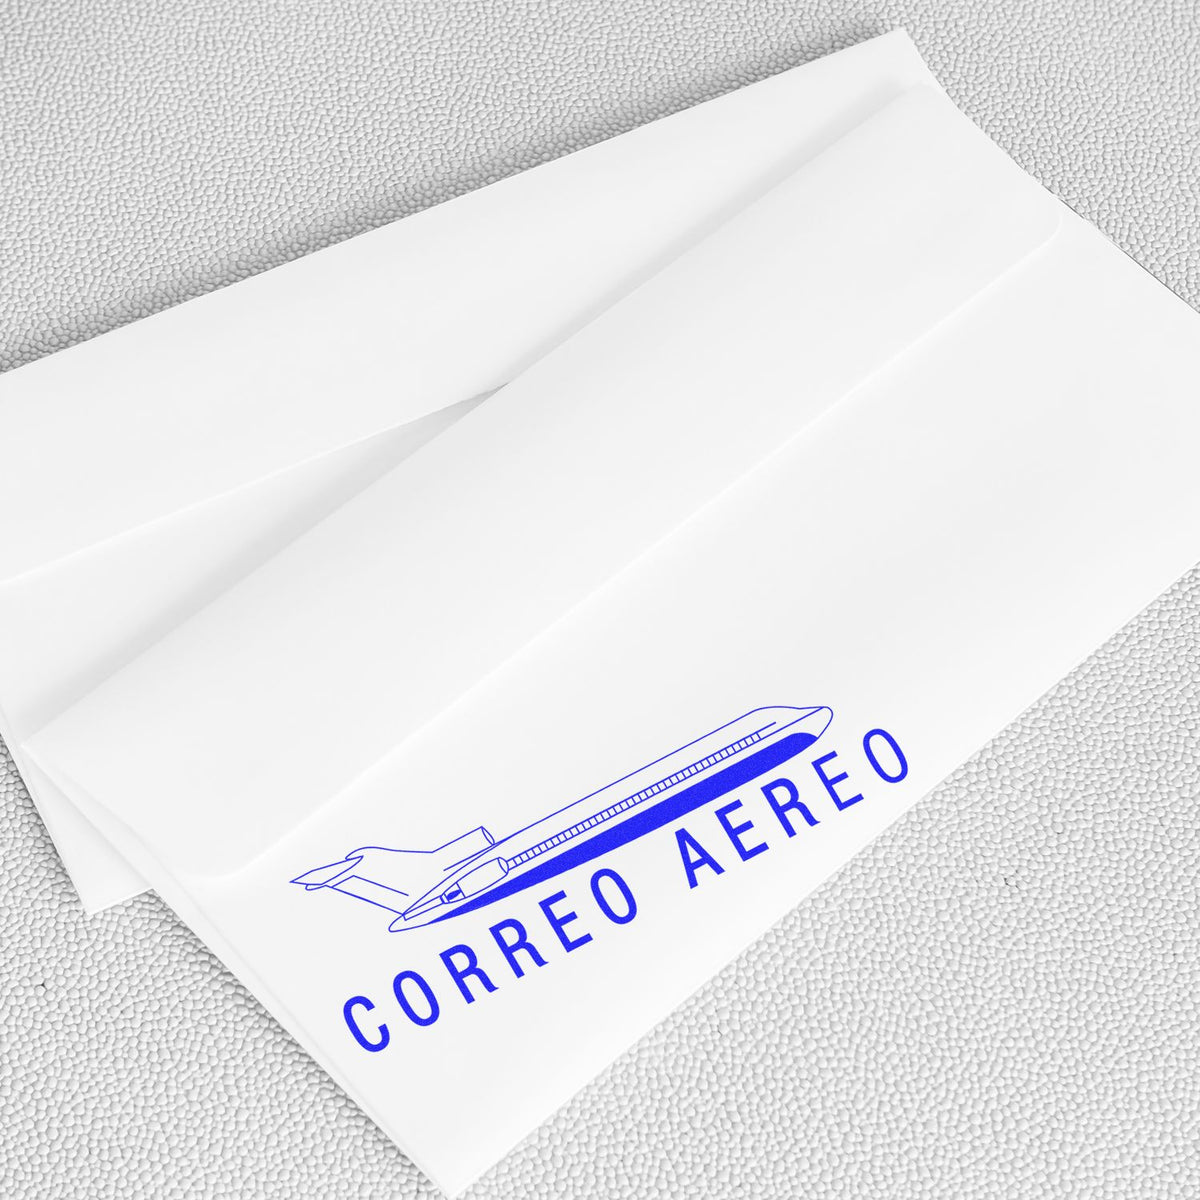 Correo Aero Rubber Stamp In Use Photo